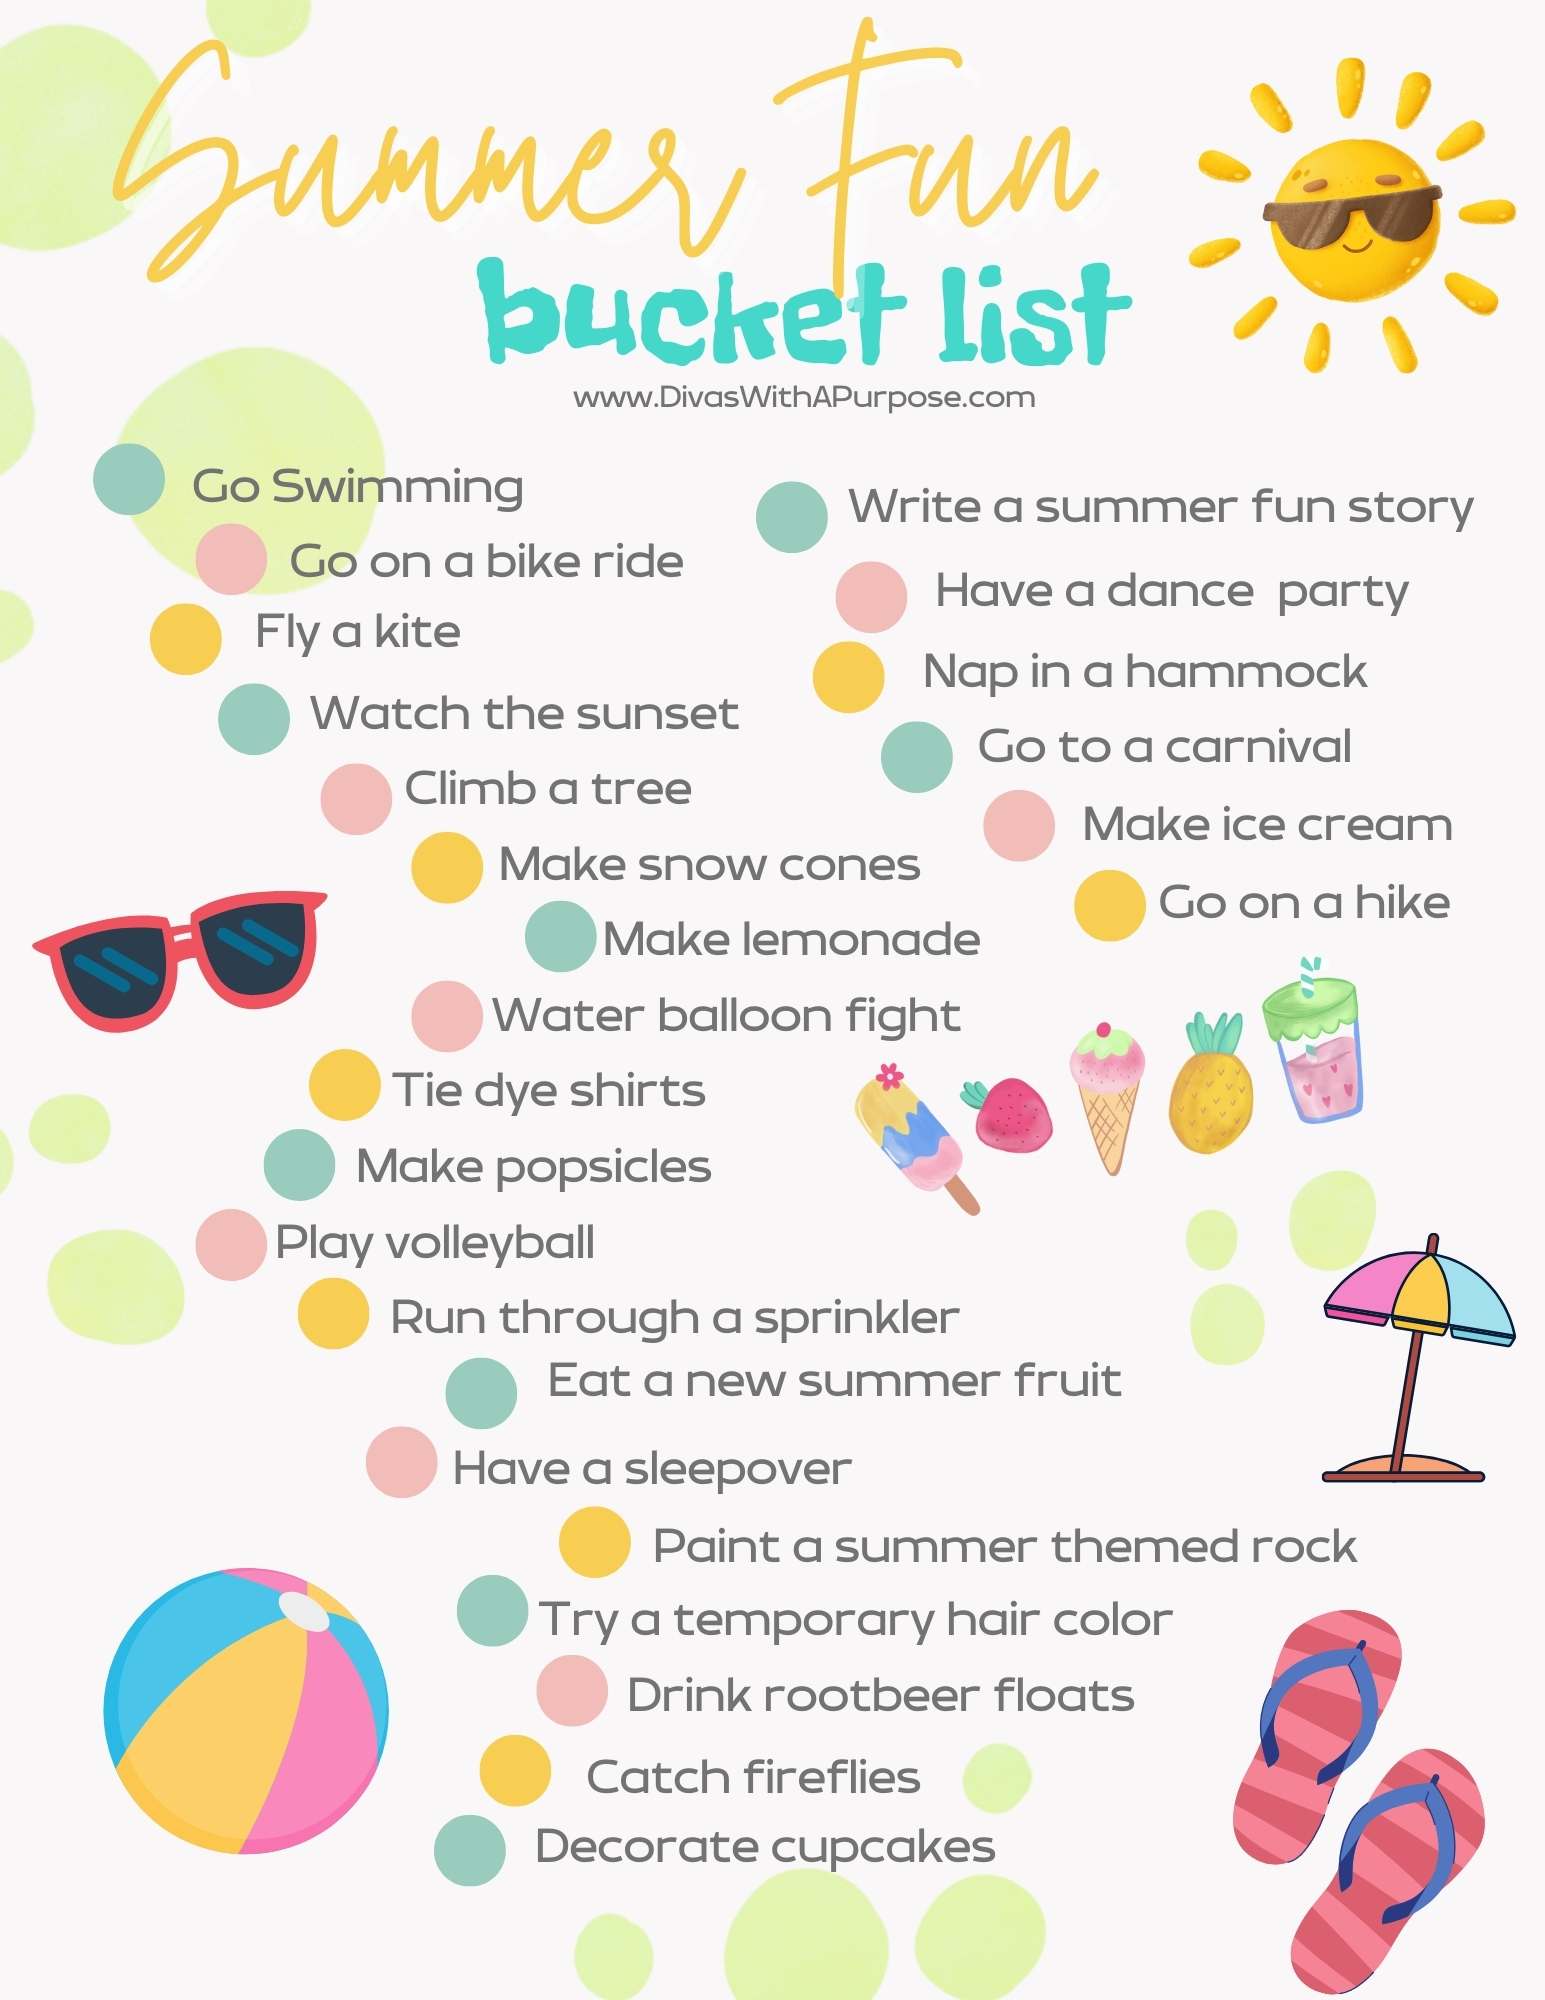 A list of Summer Fun Bucket List ideas from Divas With A Purpose